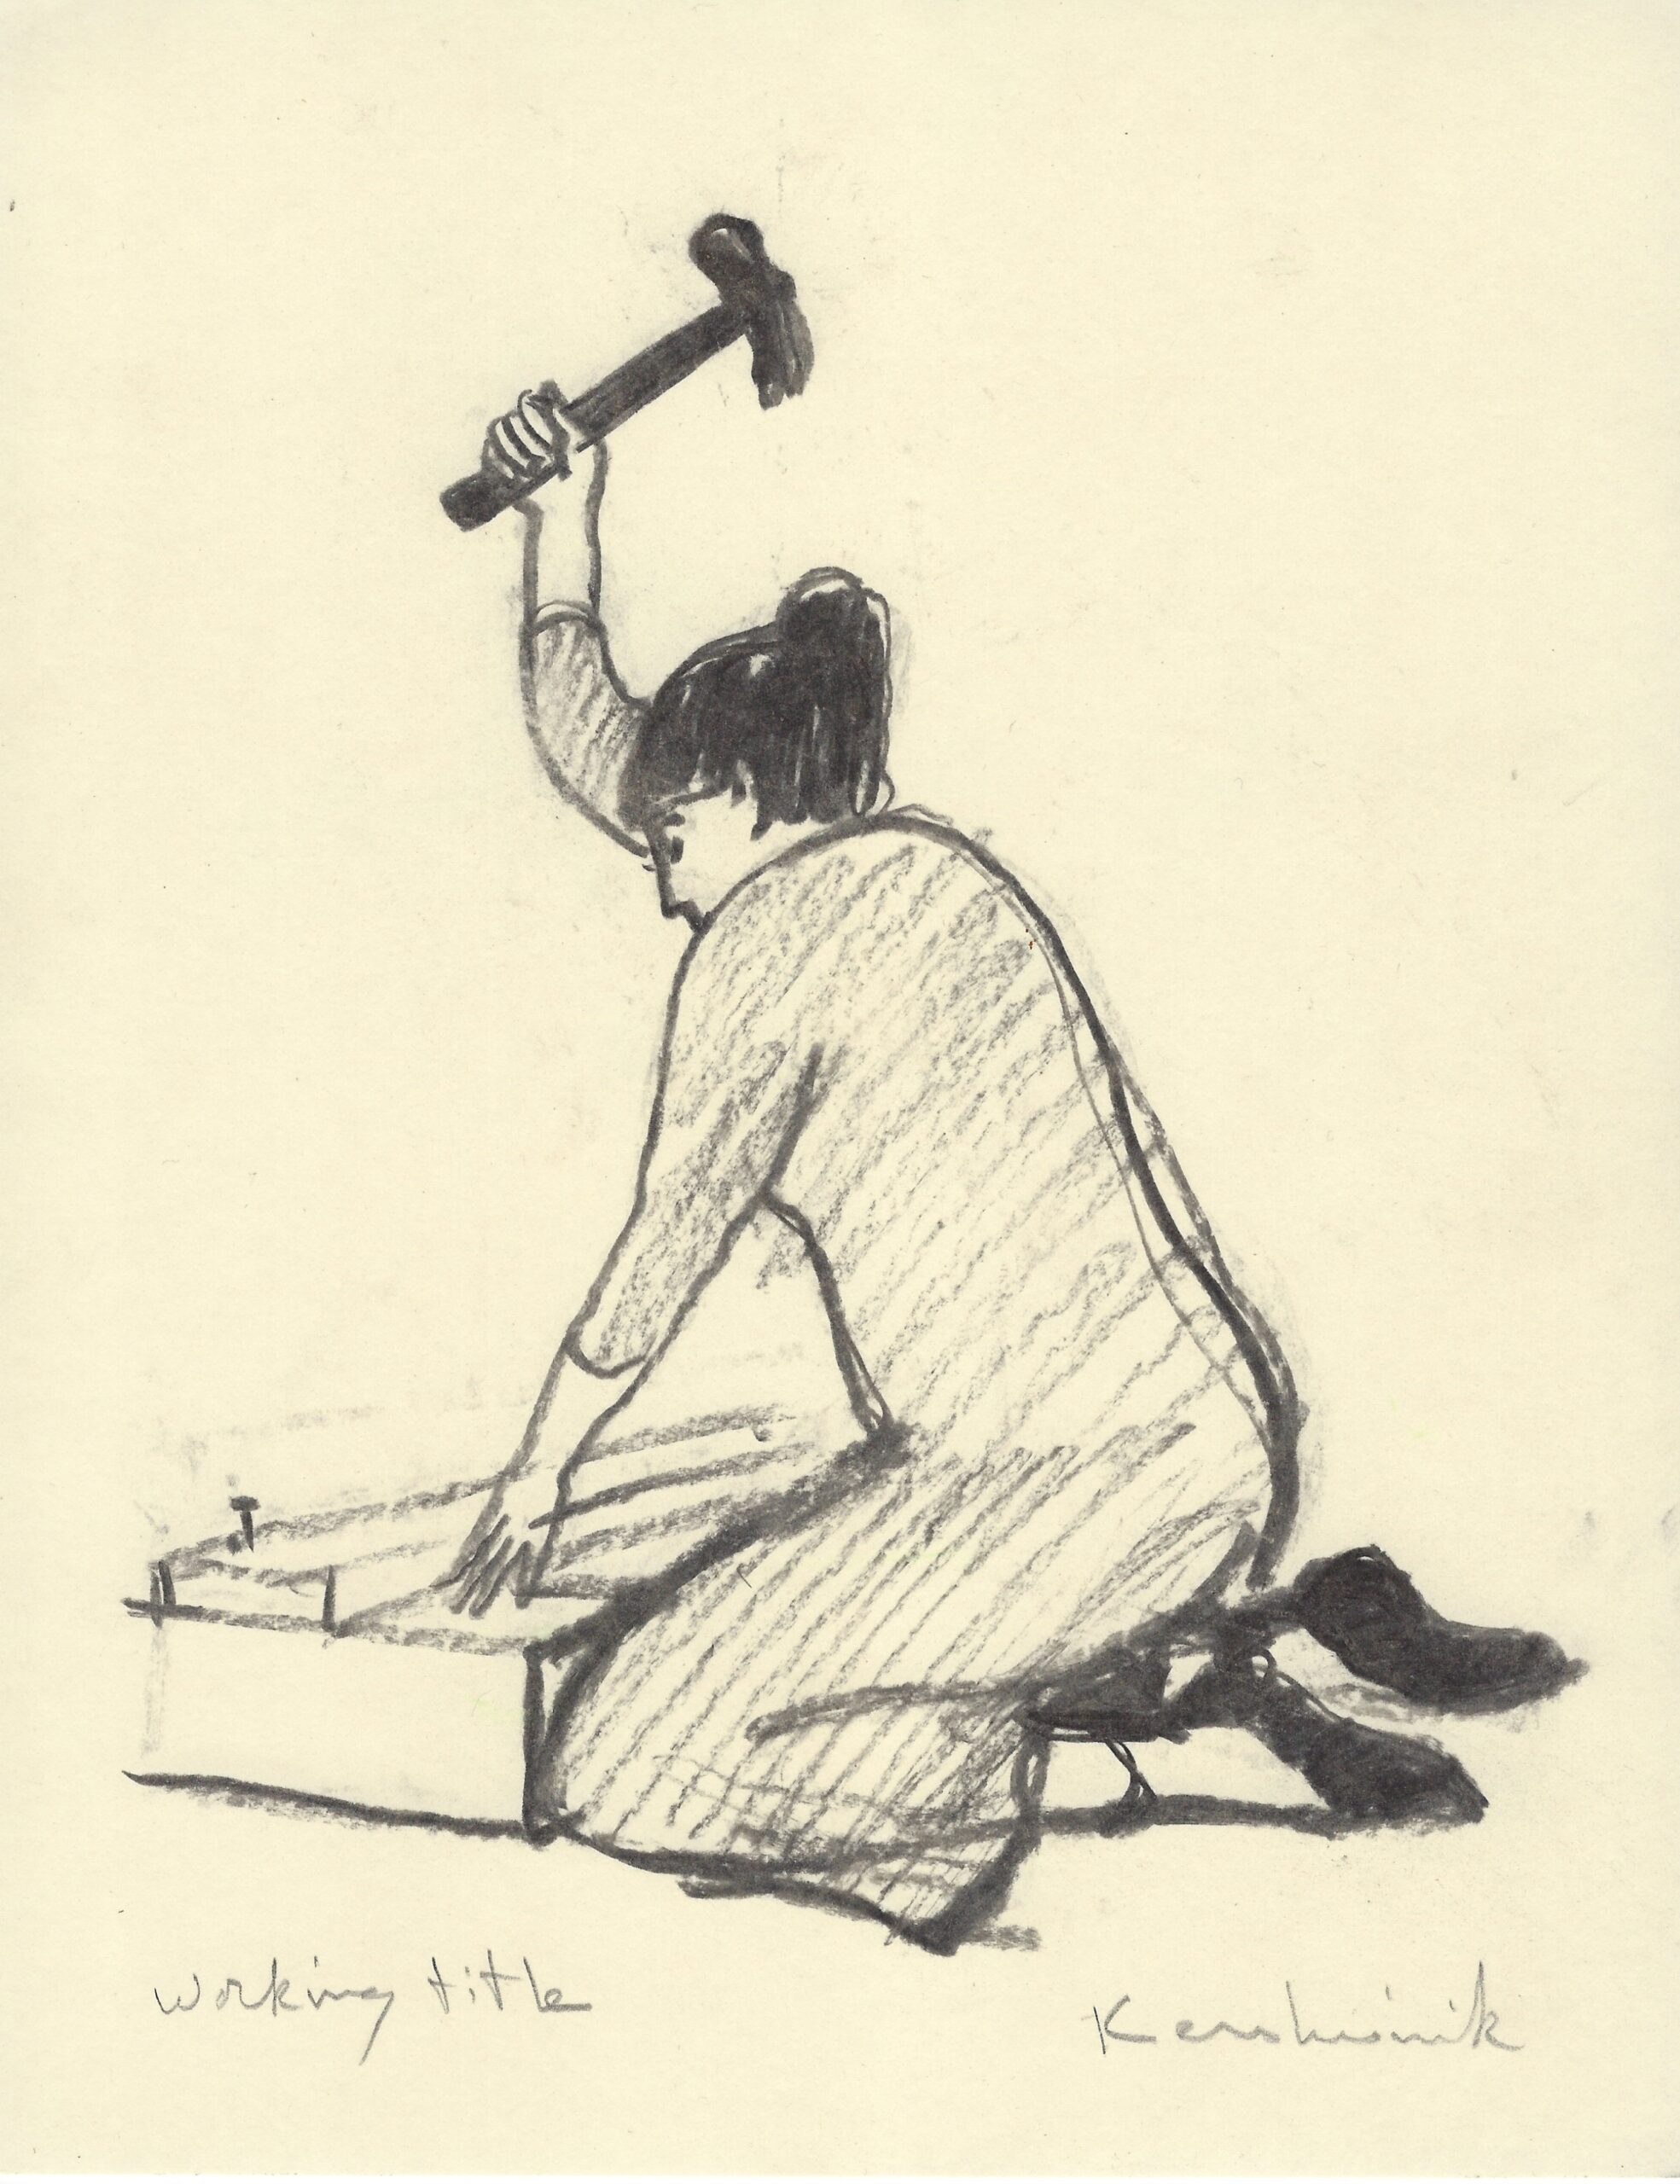 Working Title – Original Drawing